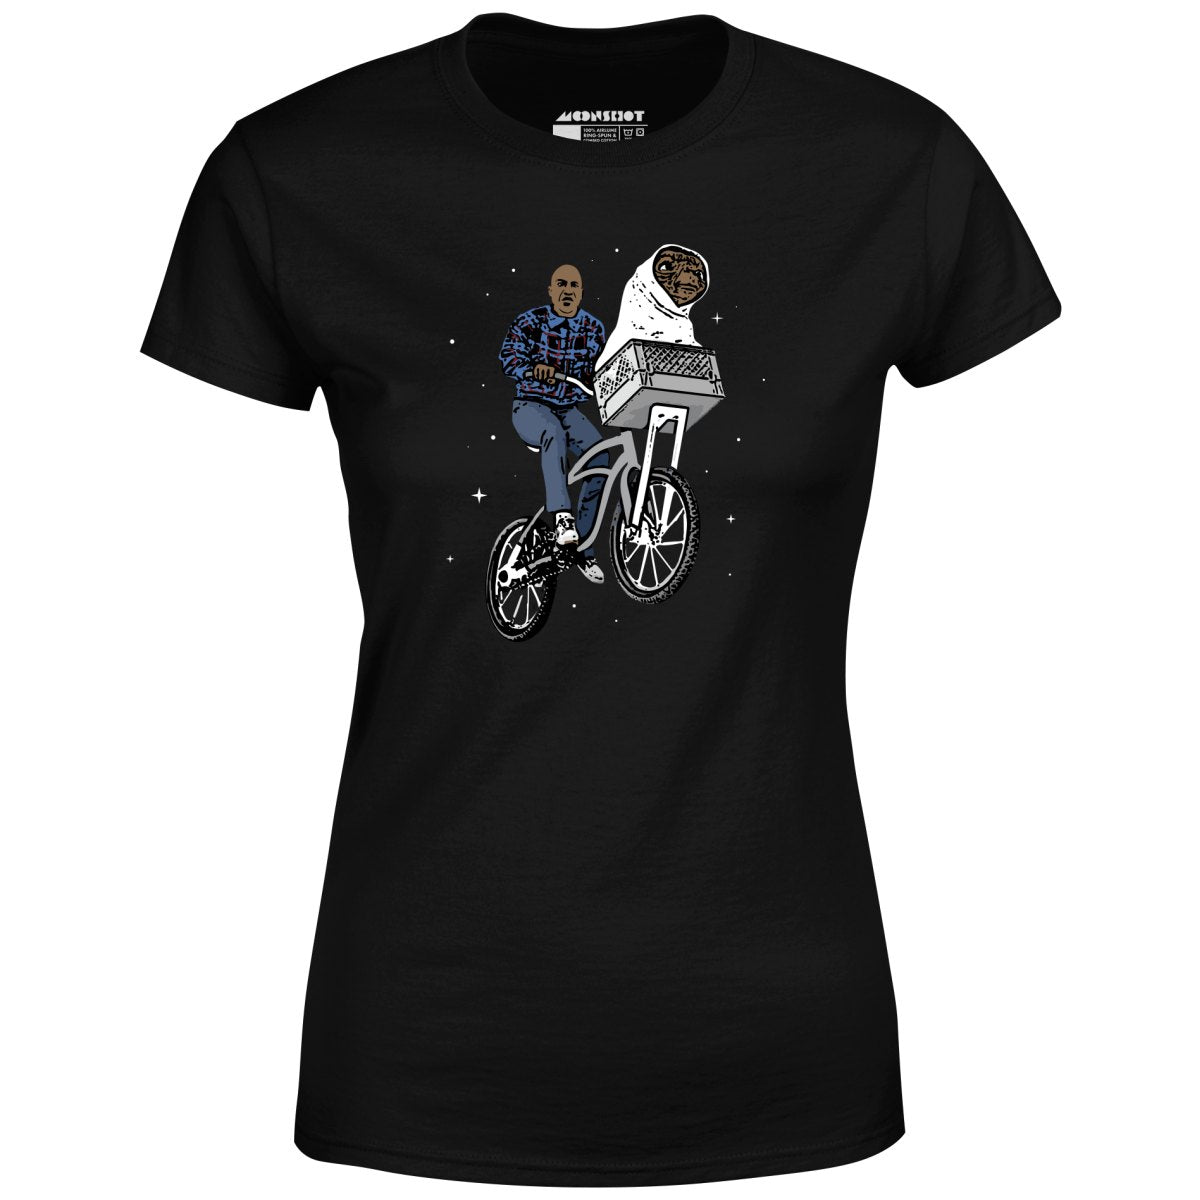 Deebo + Extra Terrestrial Bike Parody Mashup - Women's T-Shirt